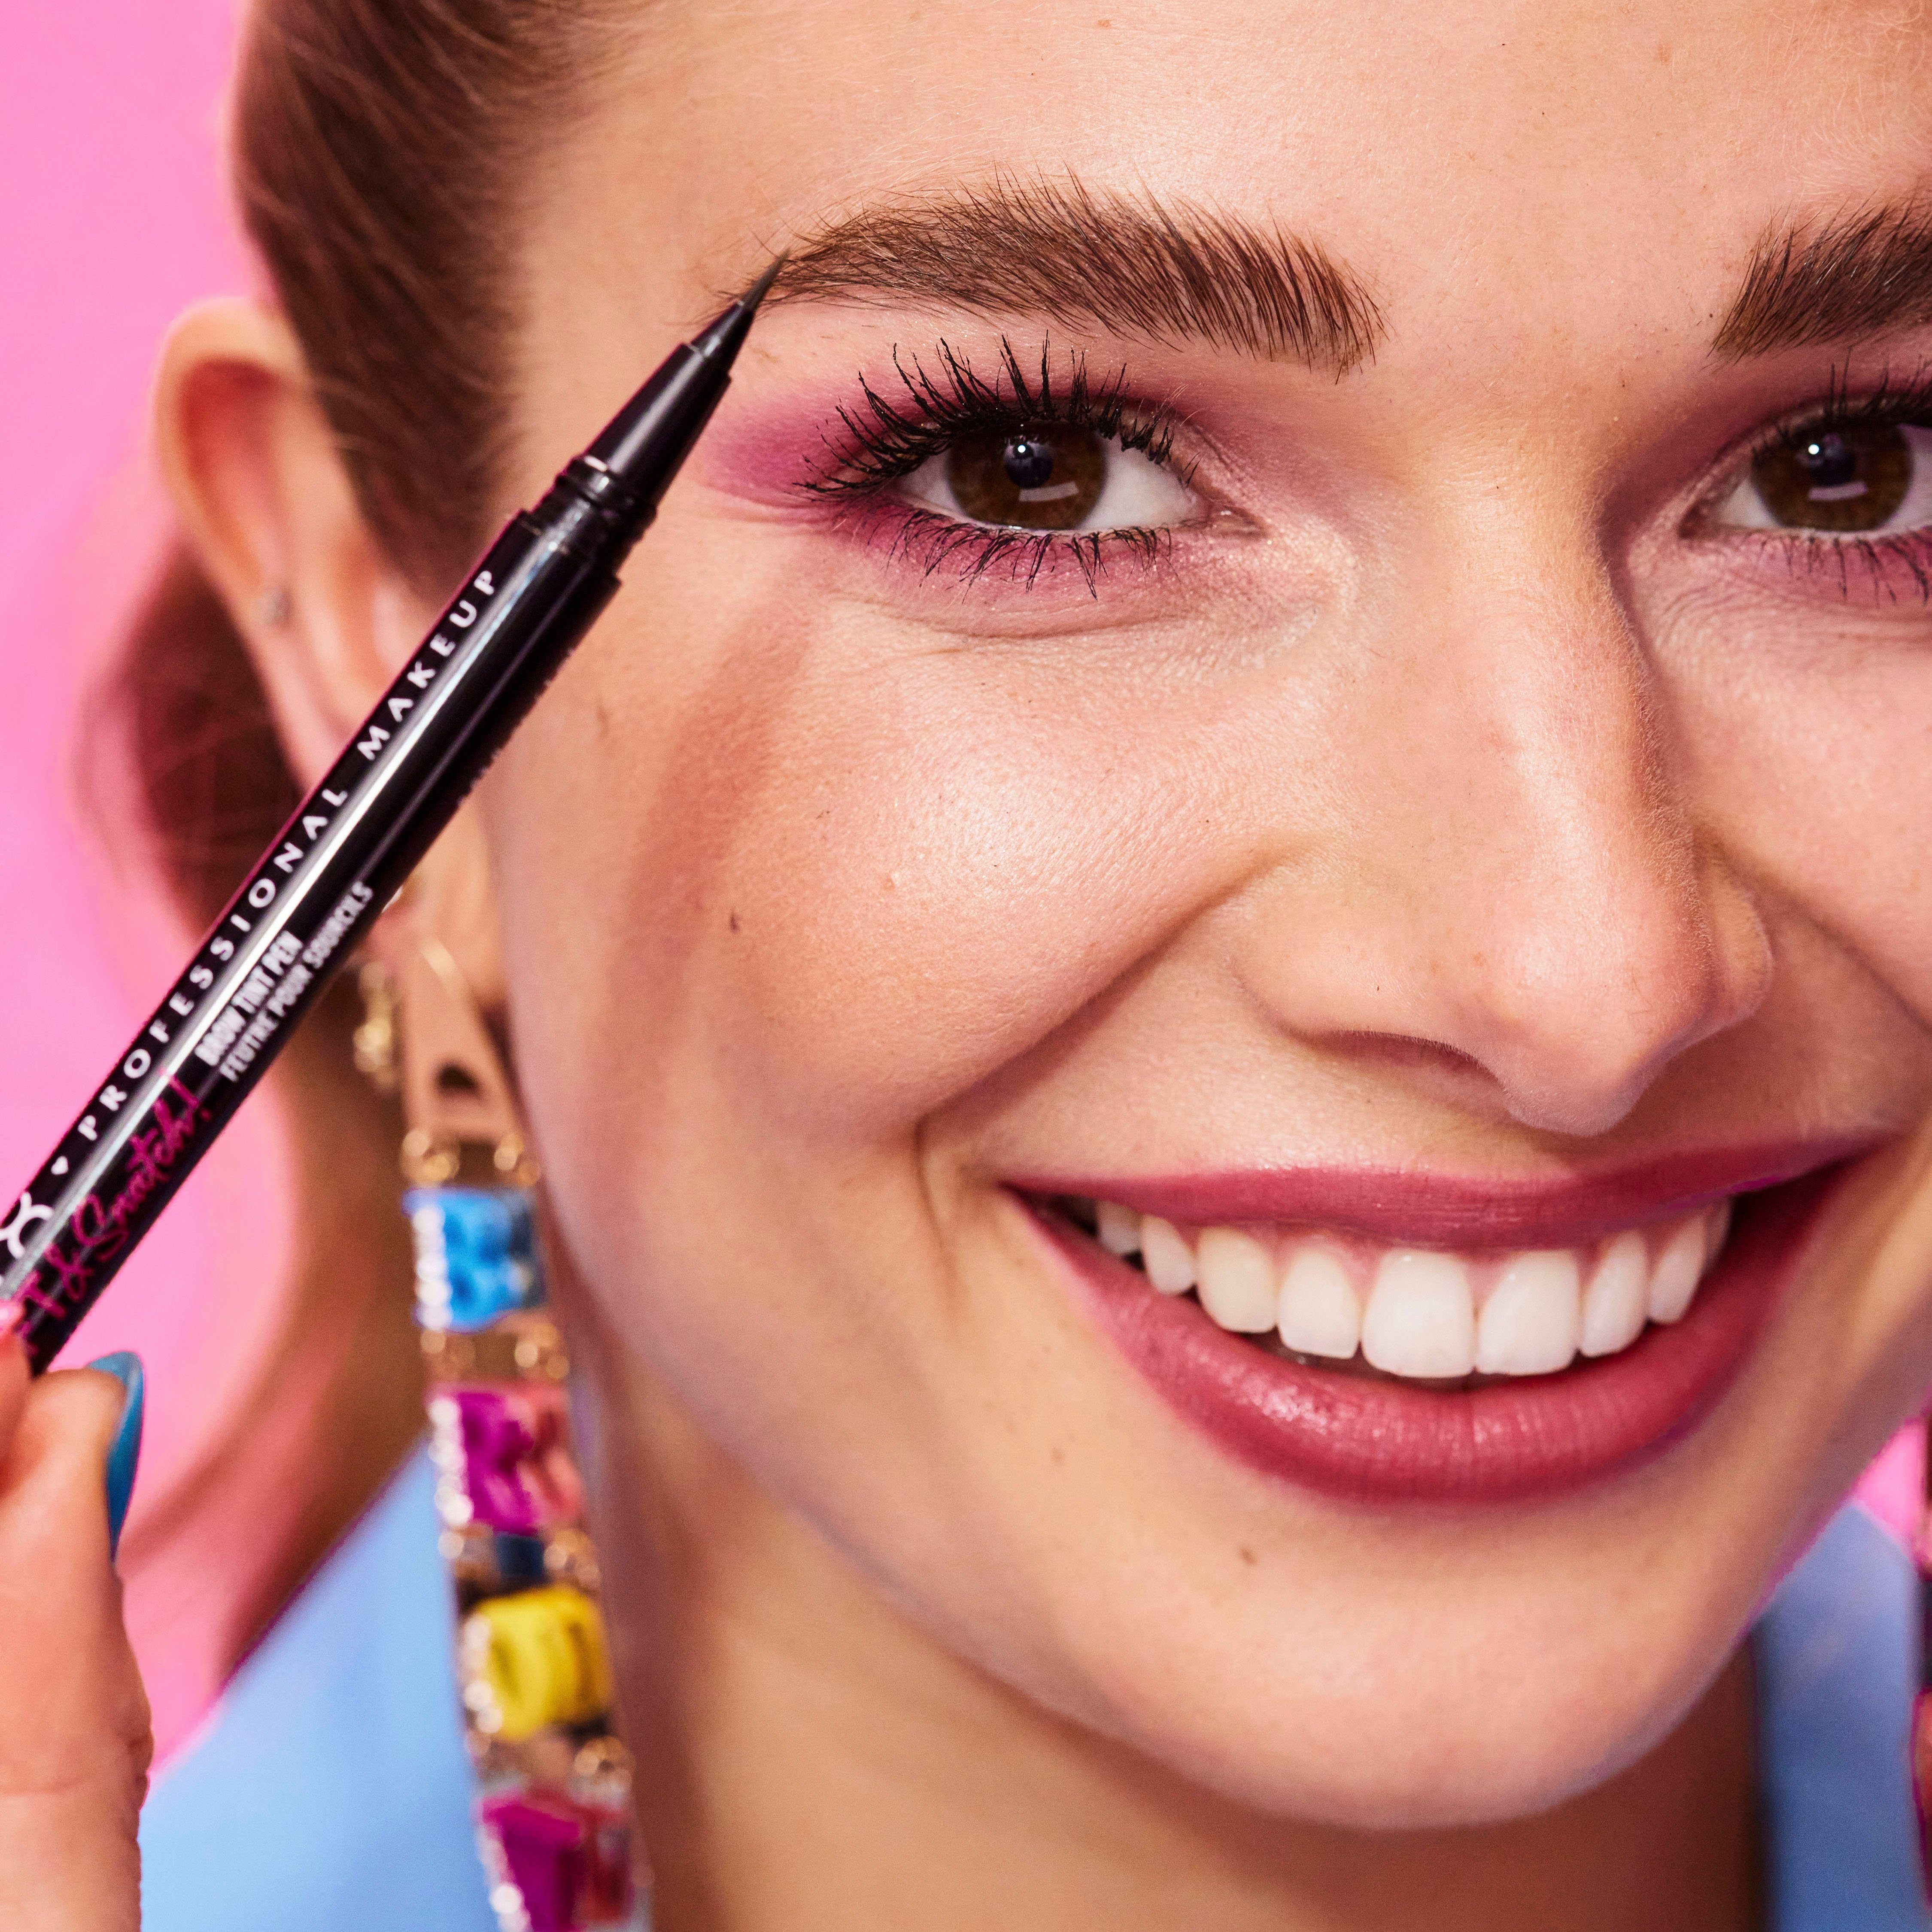 Snatch Lift Professional NYX black Pen Augenbrauen-Stift Tint Makeup & Brow